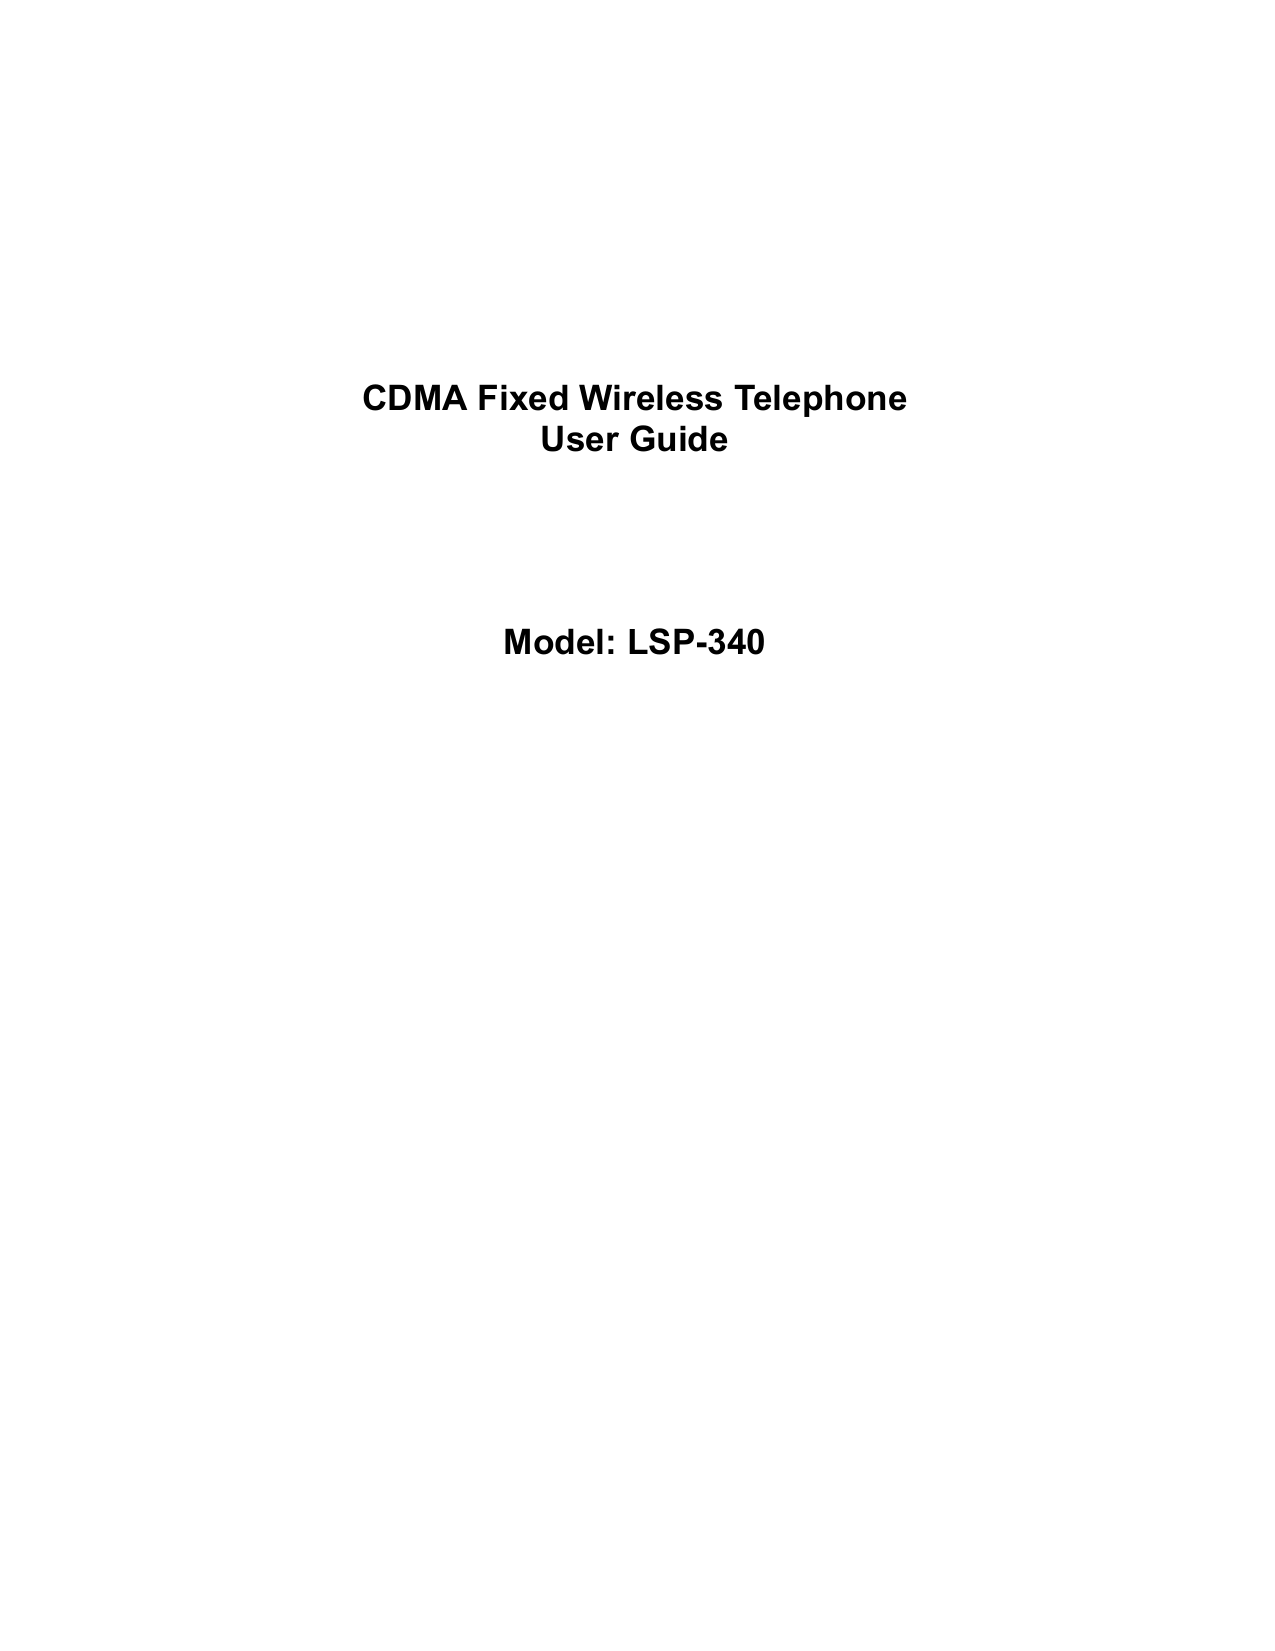 CDMA Fixed Wireless Telephone User Guide     Model: LSP-340 